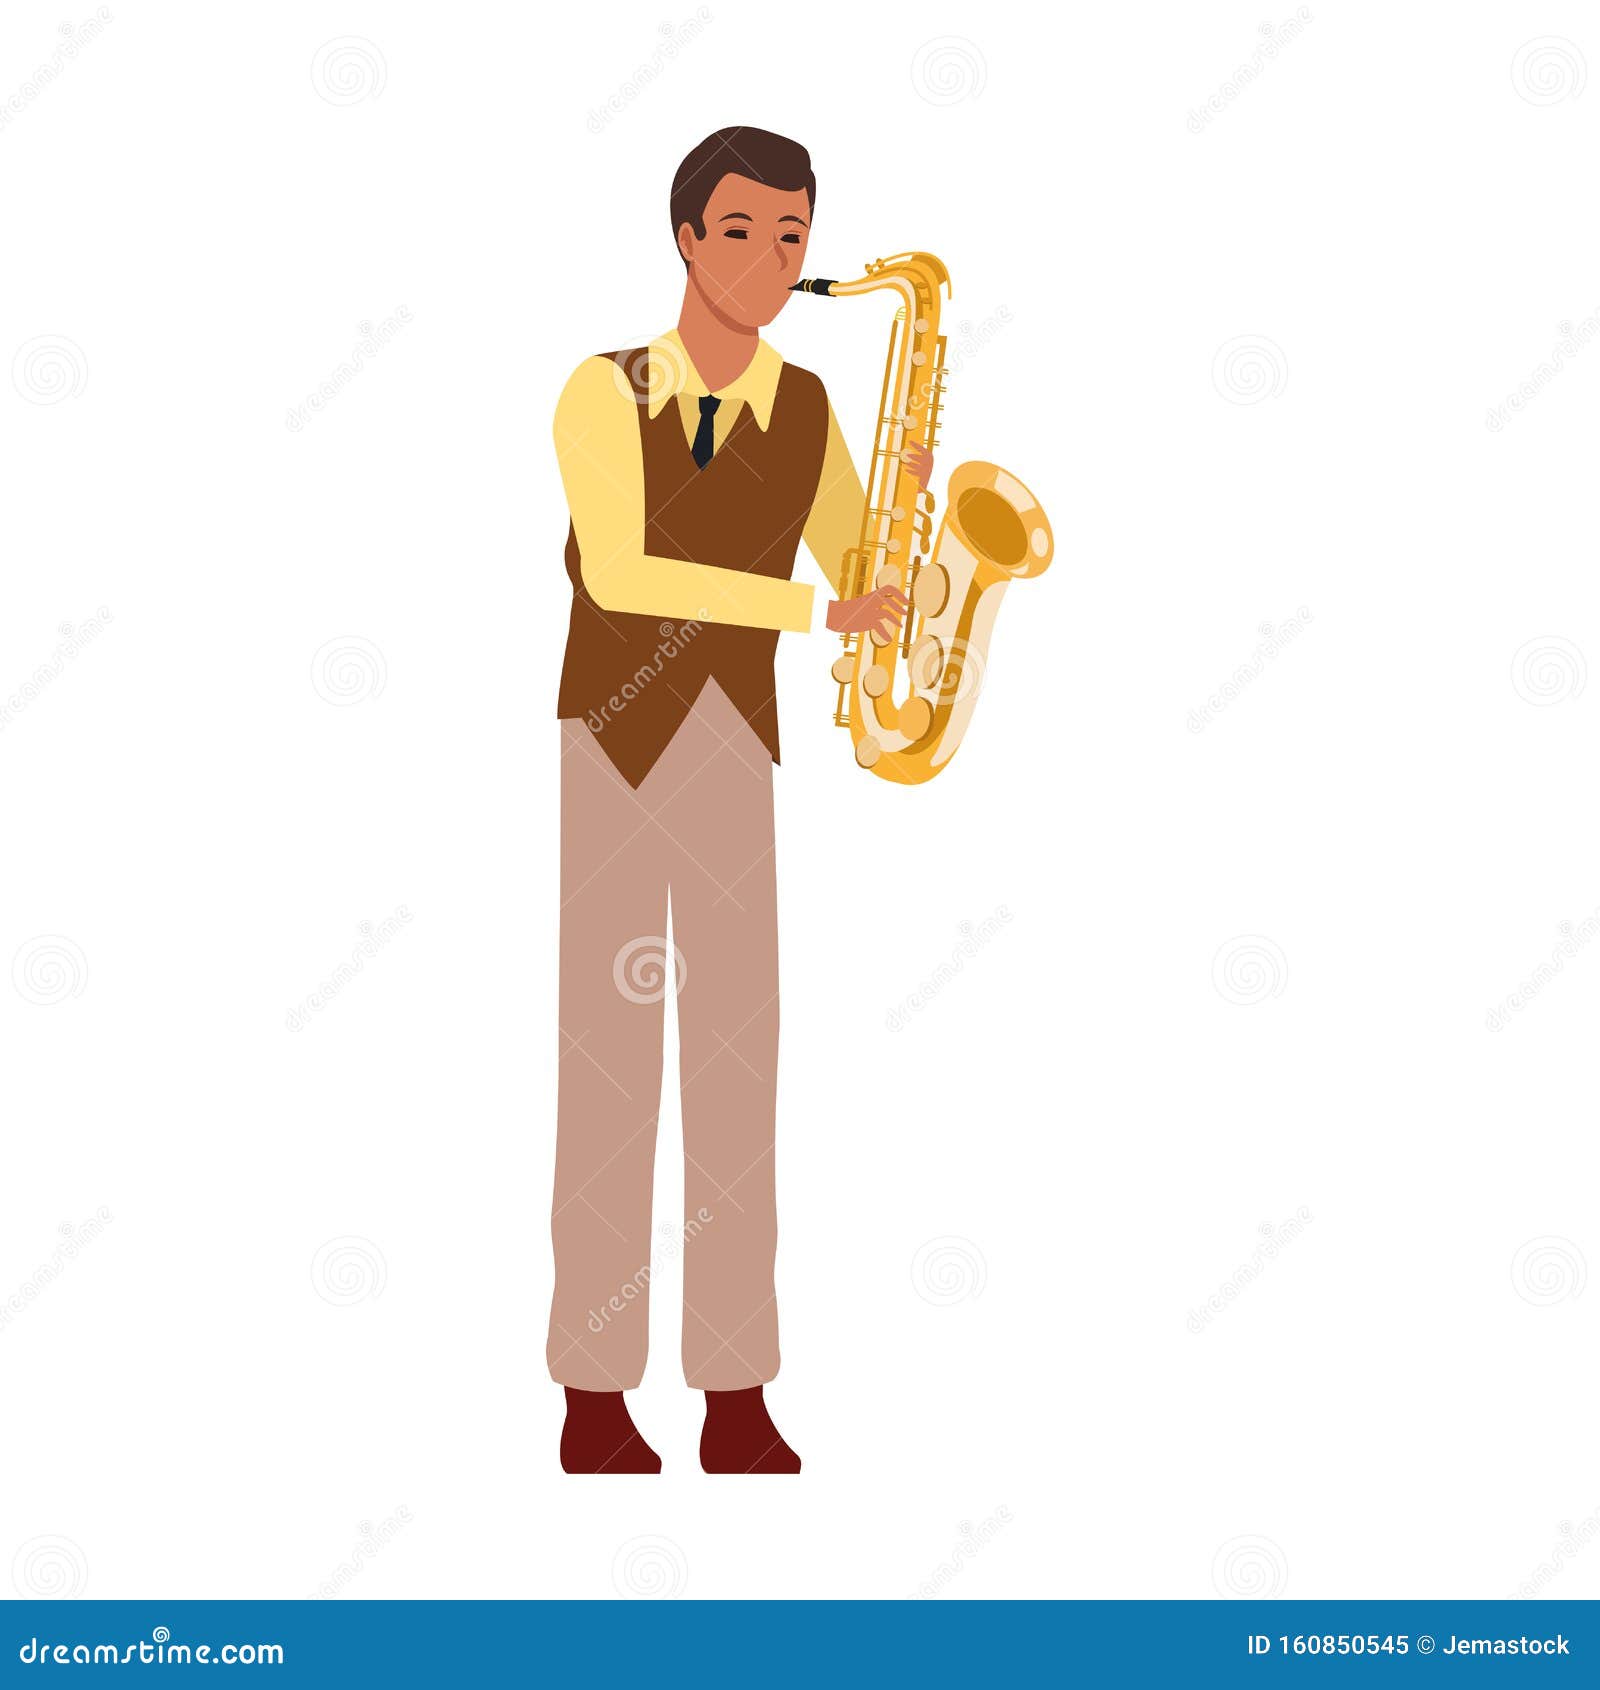 cartoon musician with trumpet instrument, flat 